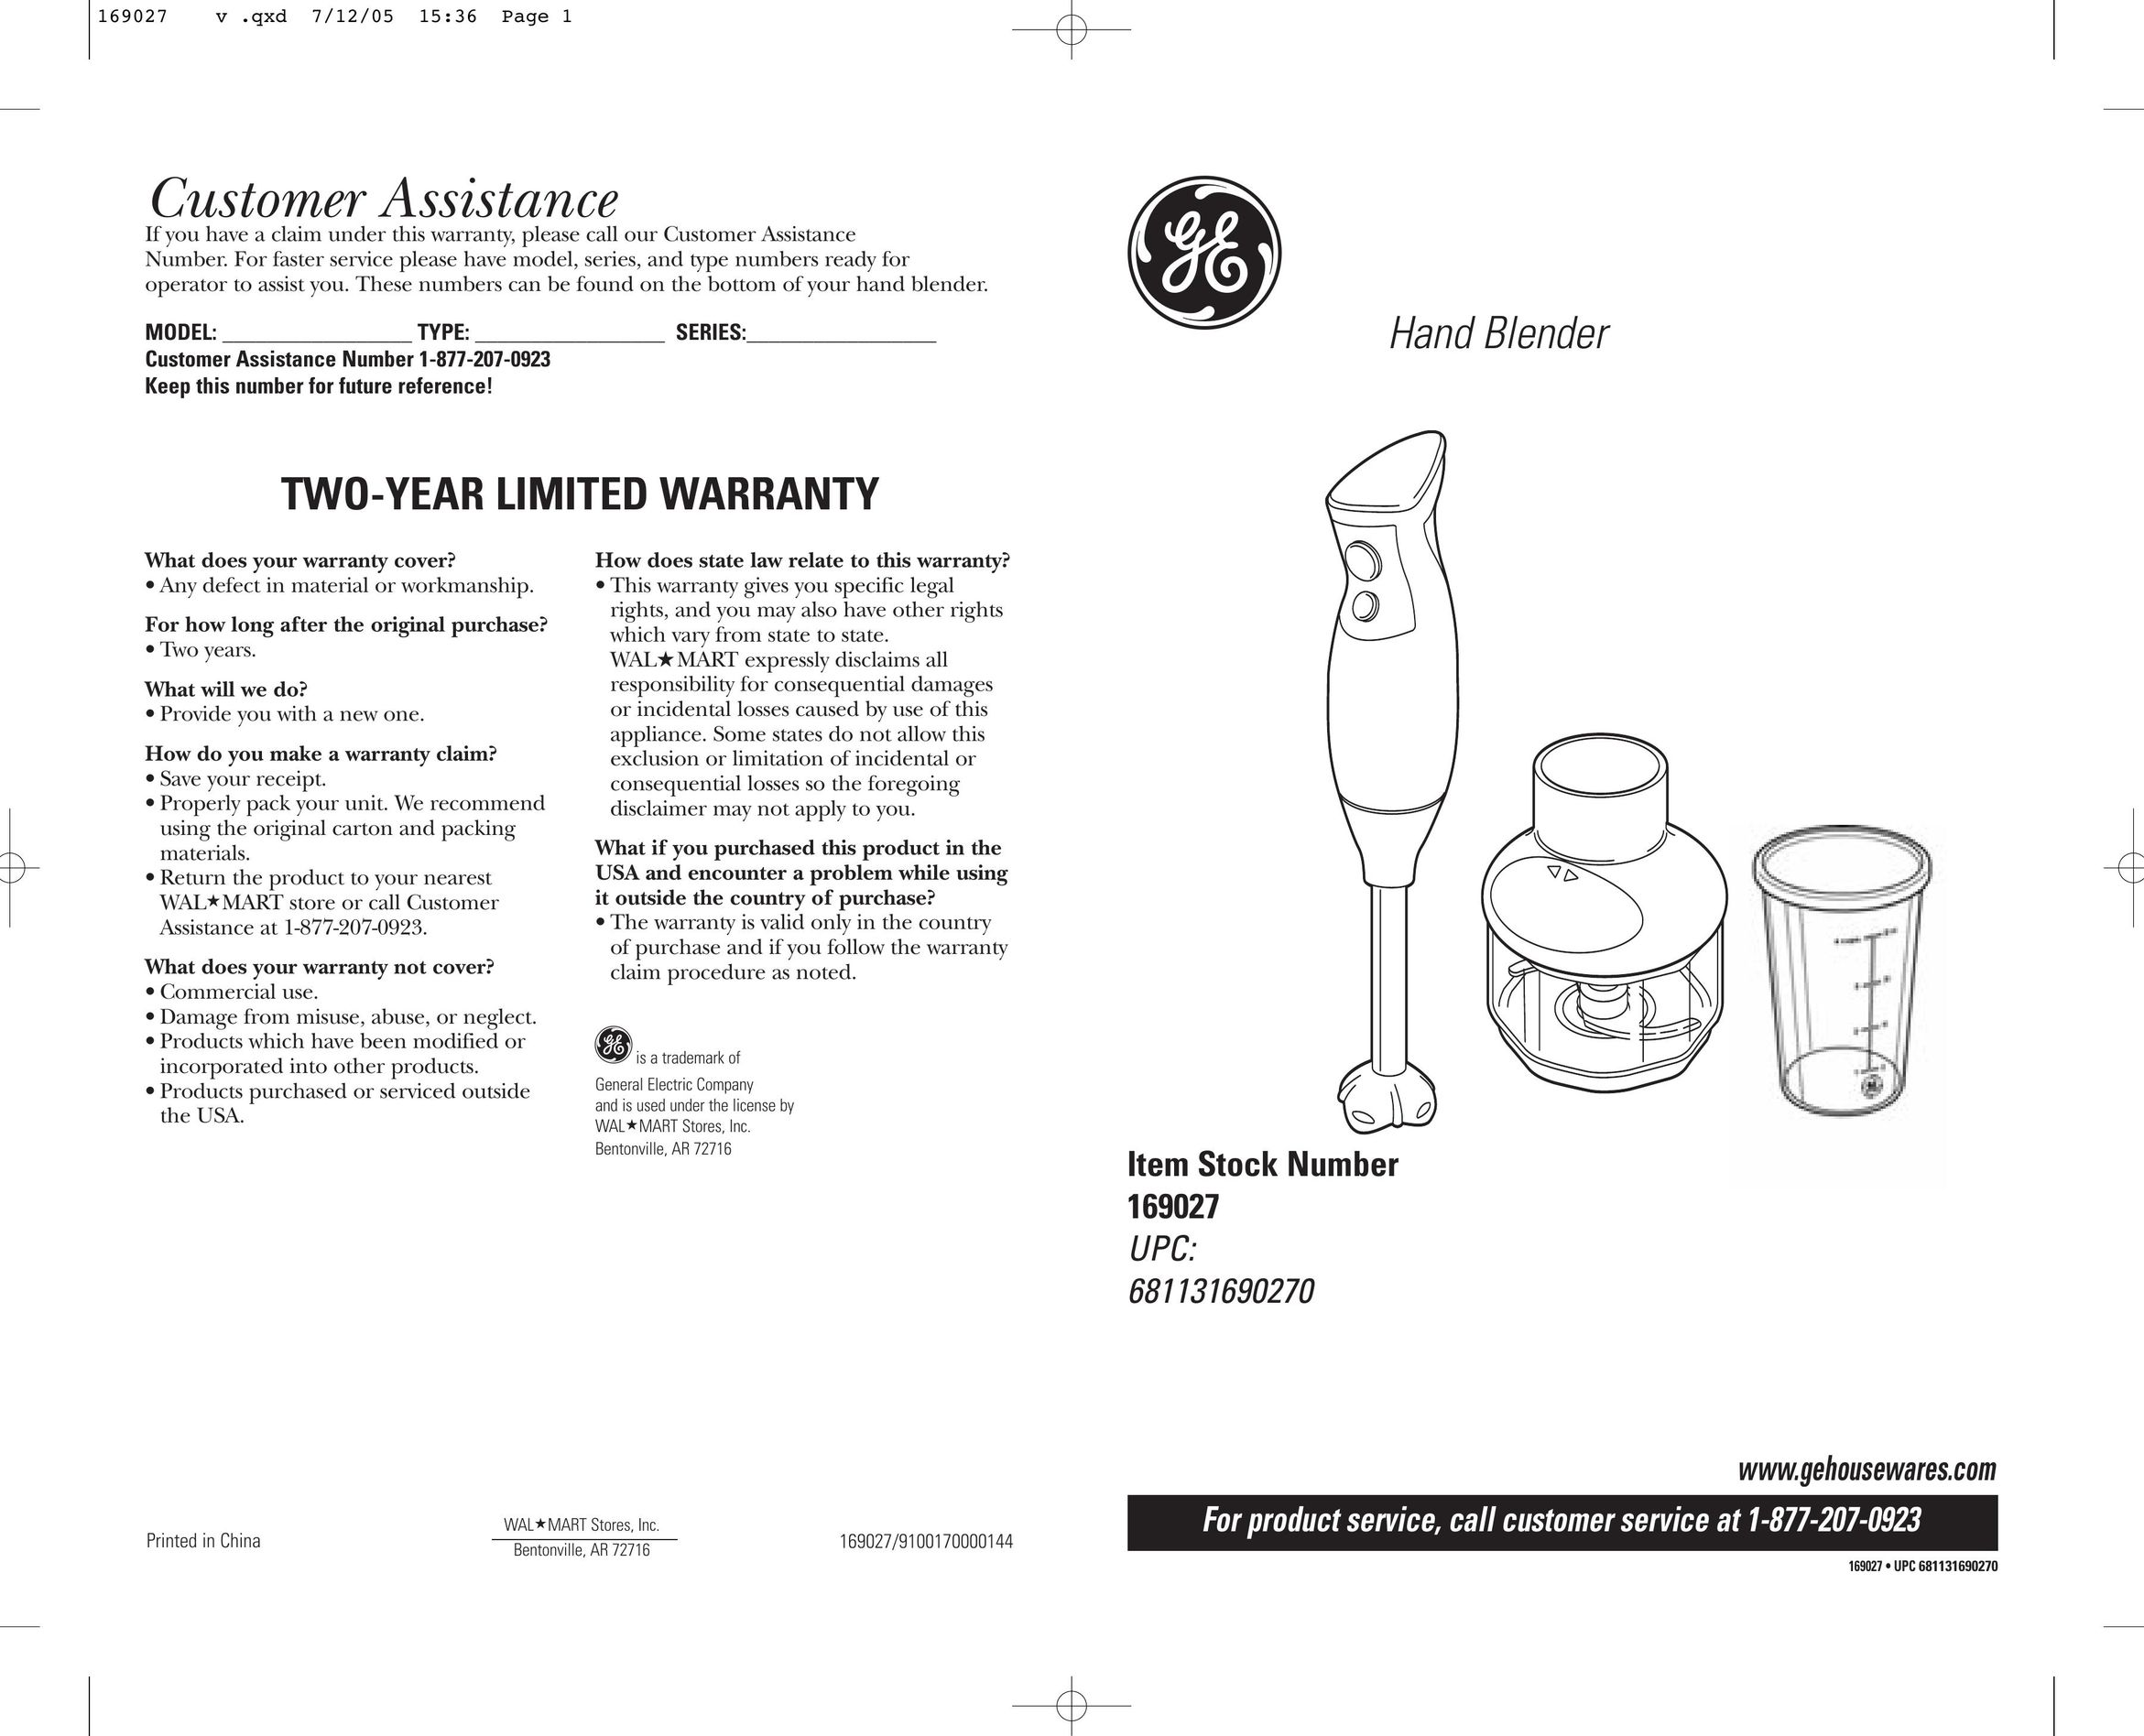 GE 169027 Blender User Manual